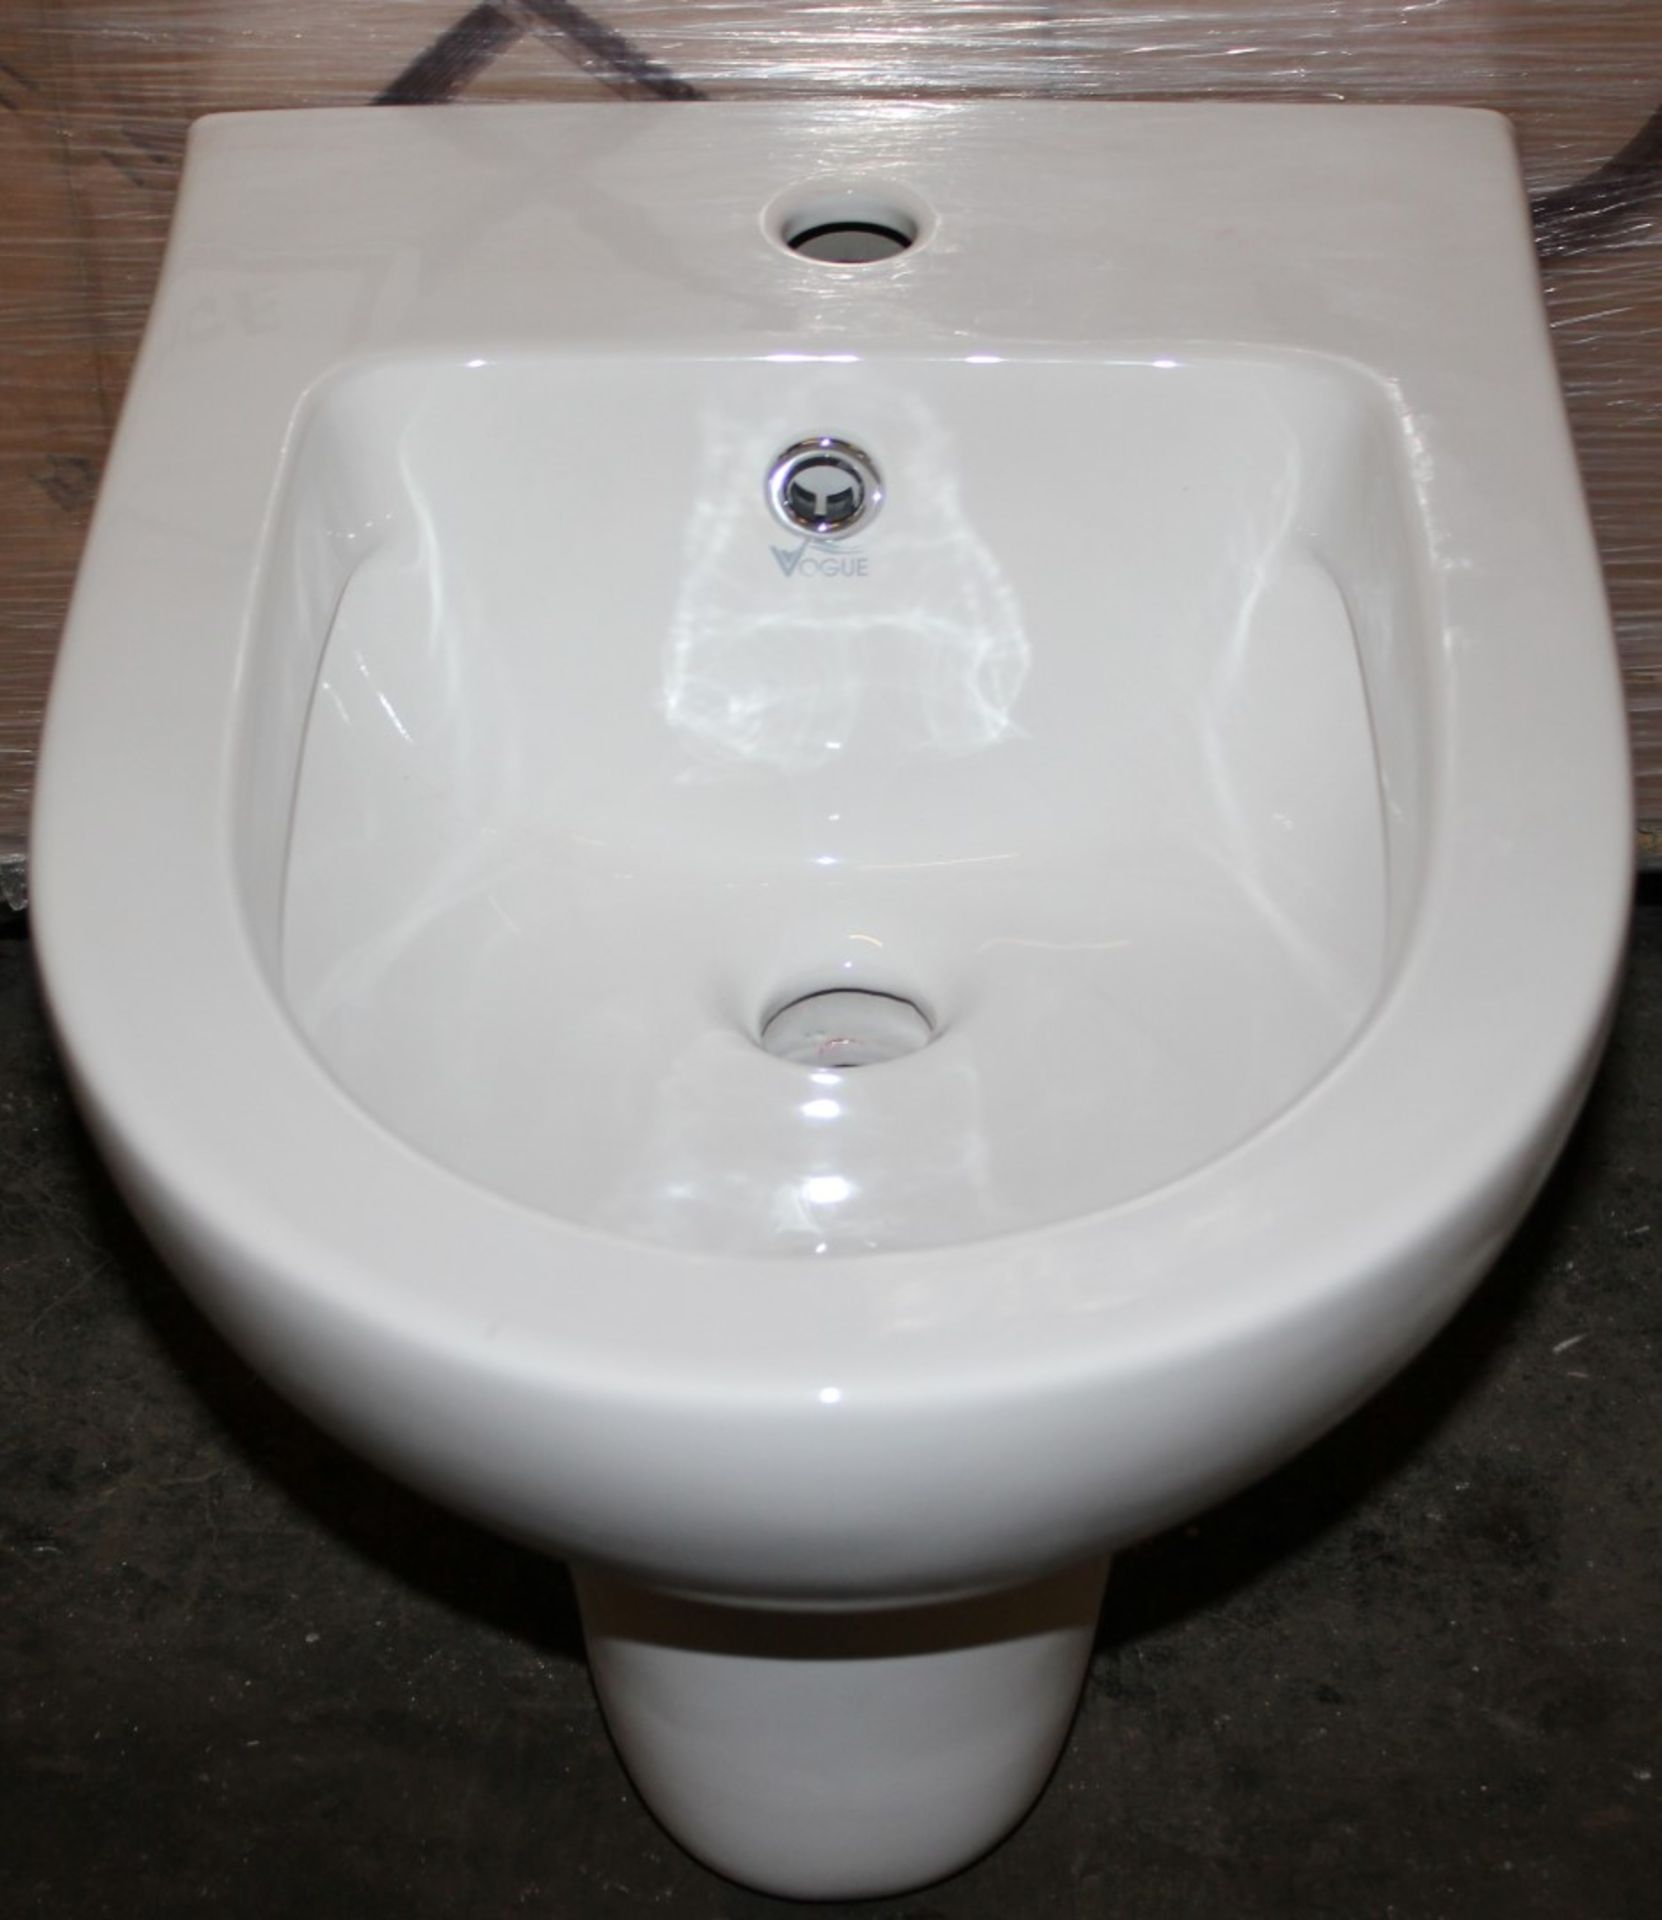 1 x Vogue Bathrooms KAMARA Single Tap Hole WALL HUNG BIDET - Brand New and Boxed - High Quality